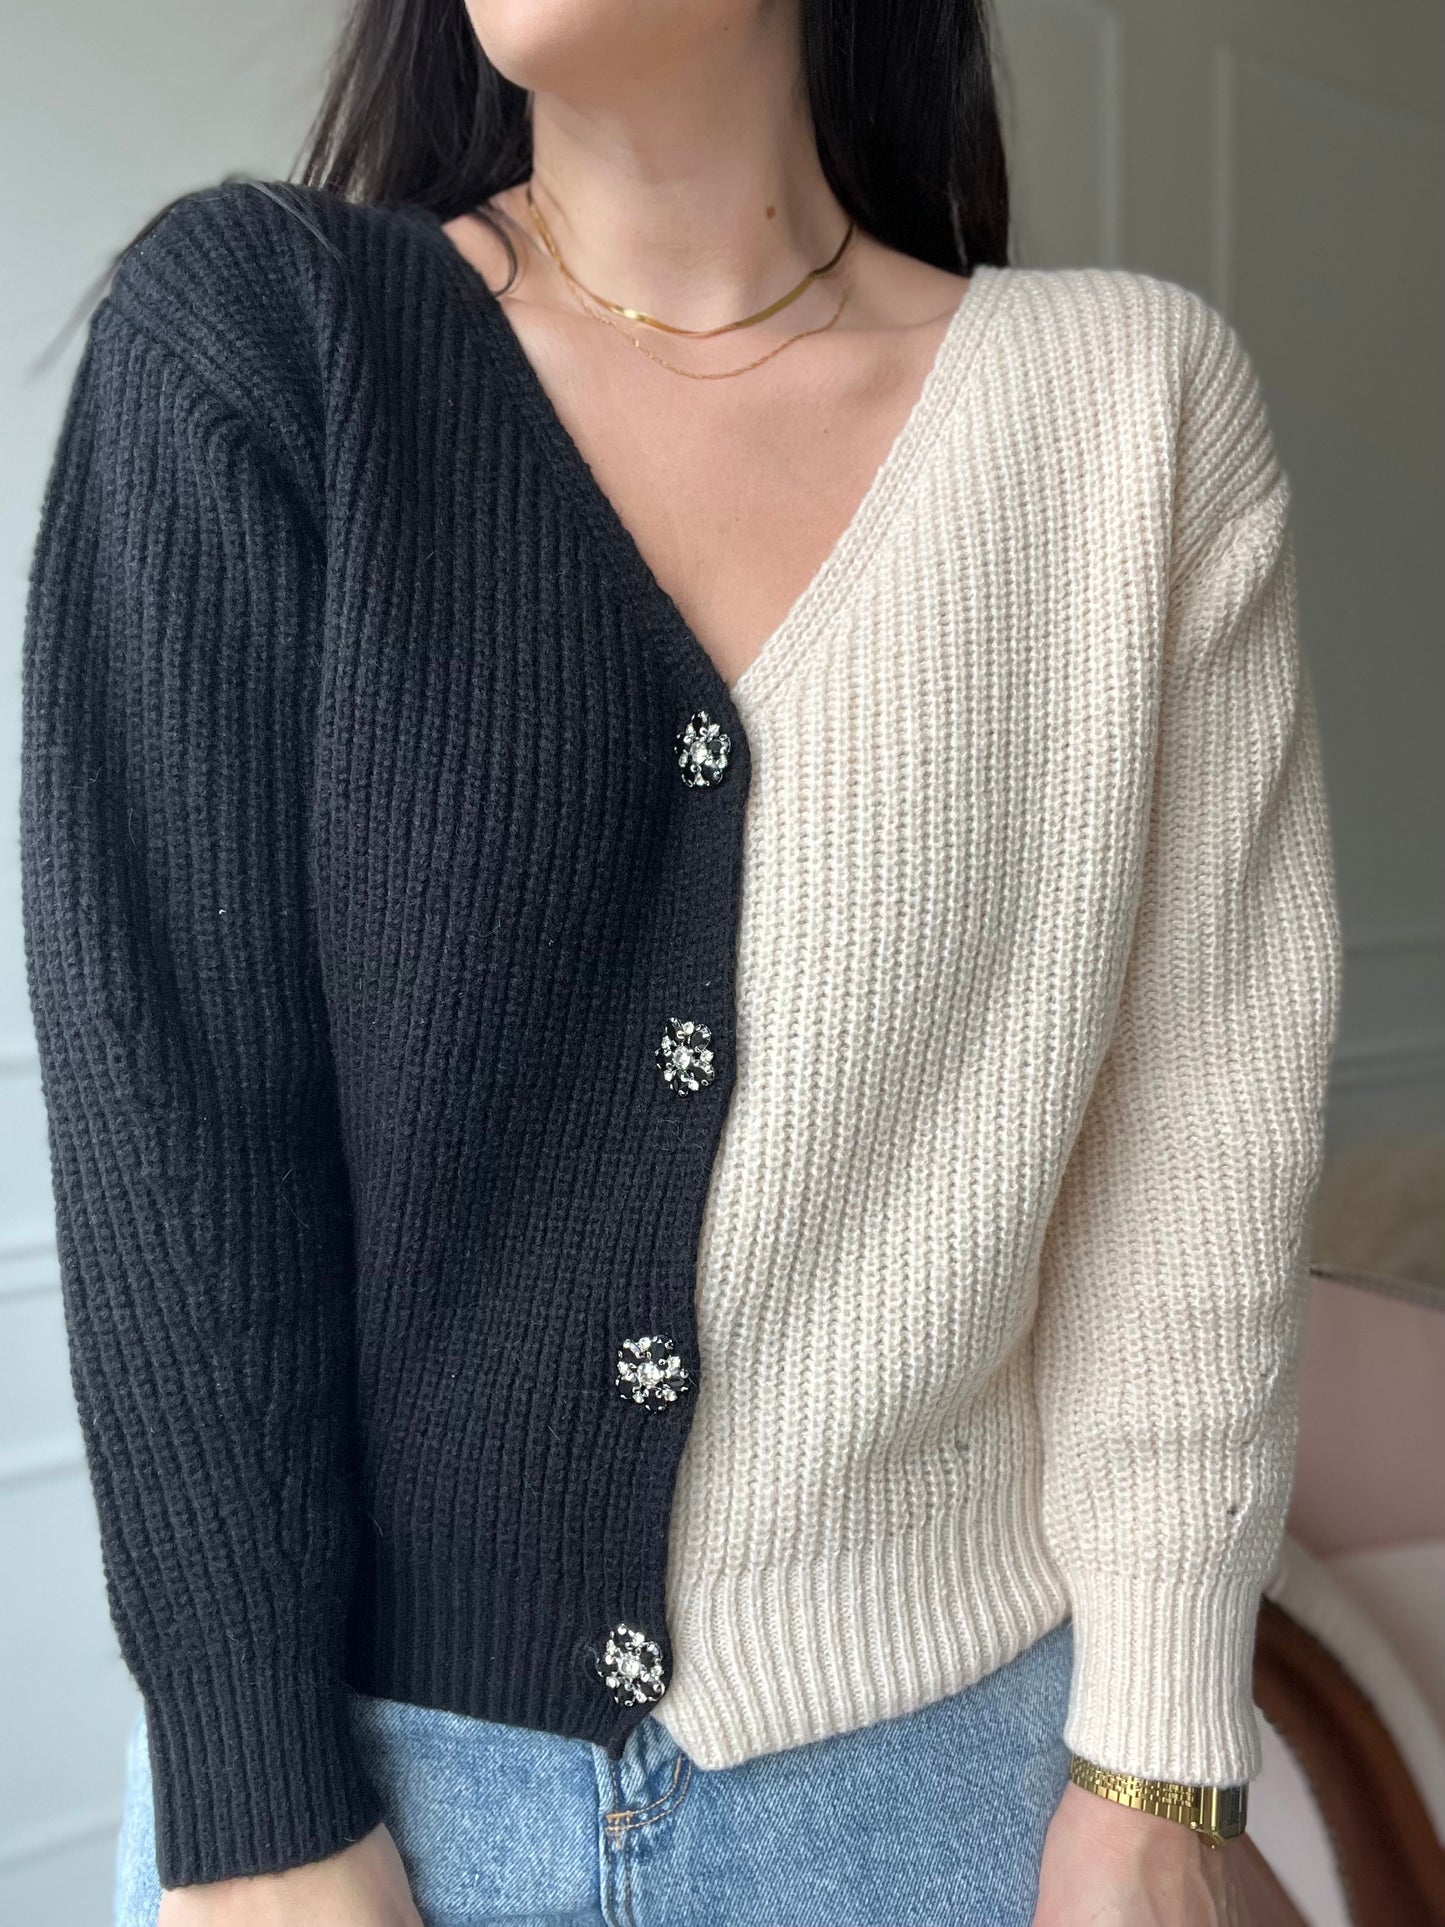 Half & Half Knit Sweater - Size M